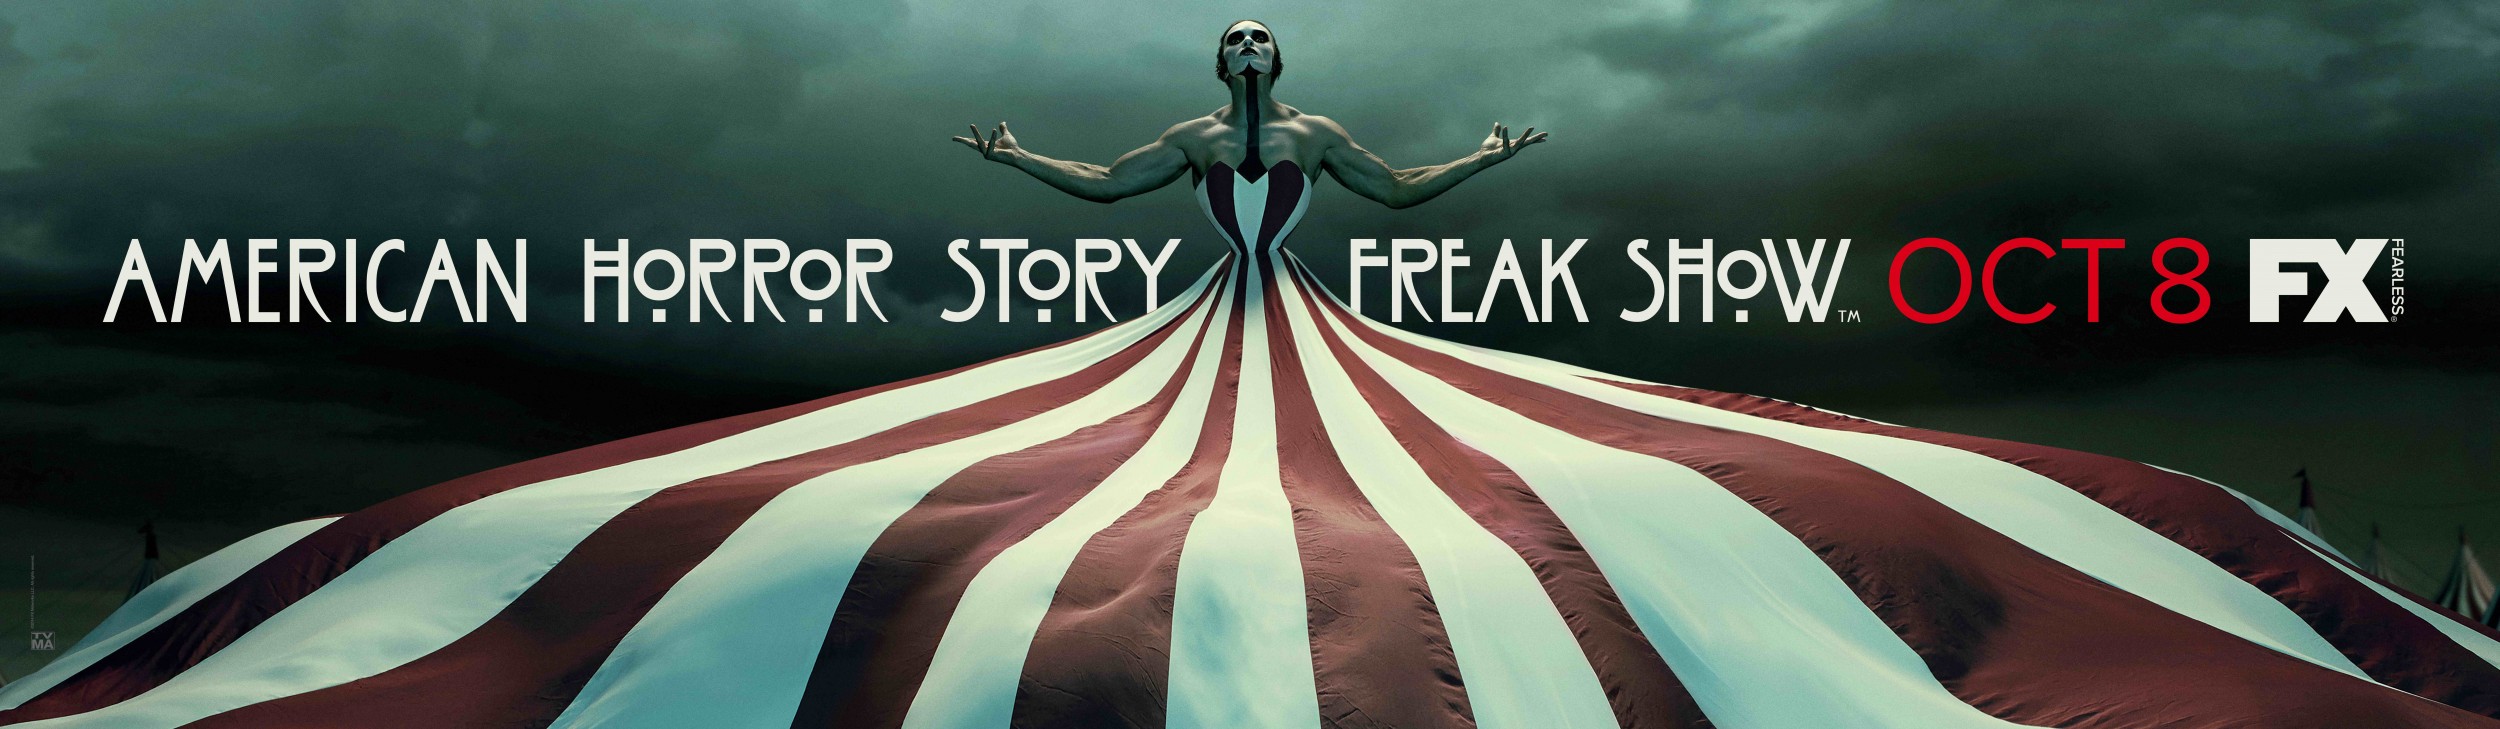 Mega Sized TV Poster Image for American Horror Story (#25 of 176)